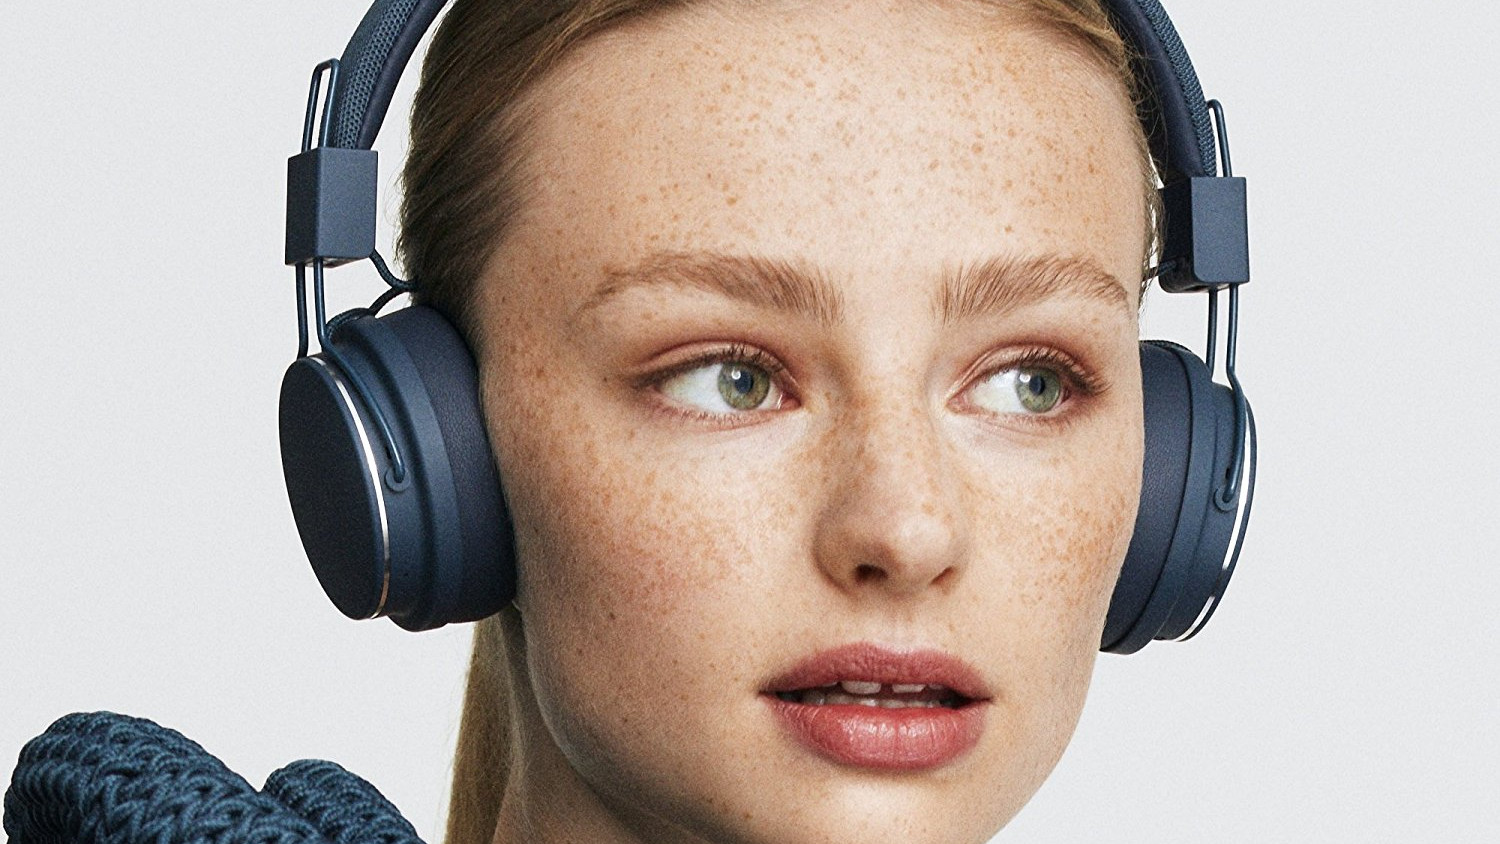 Celebs wearing headphones